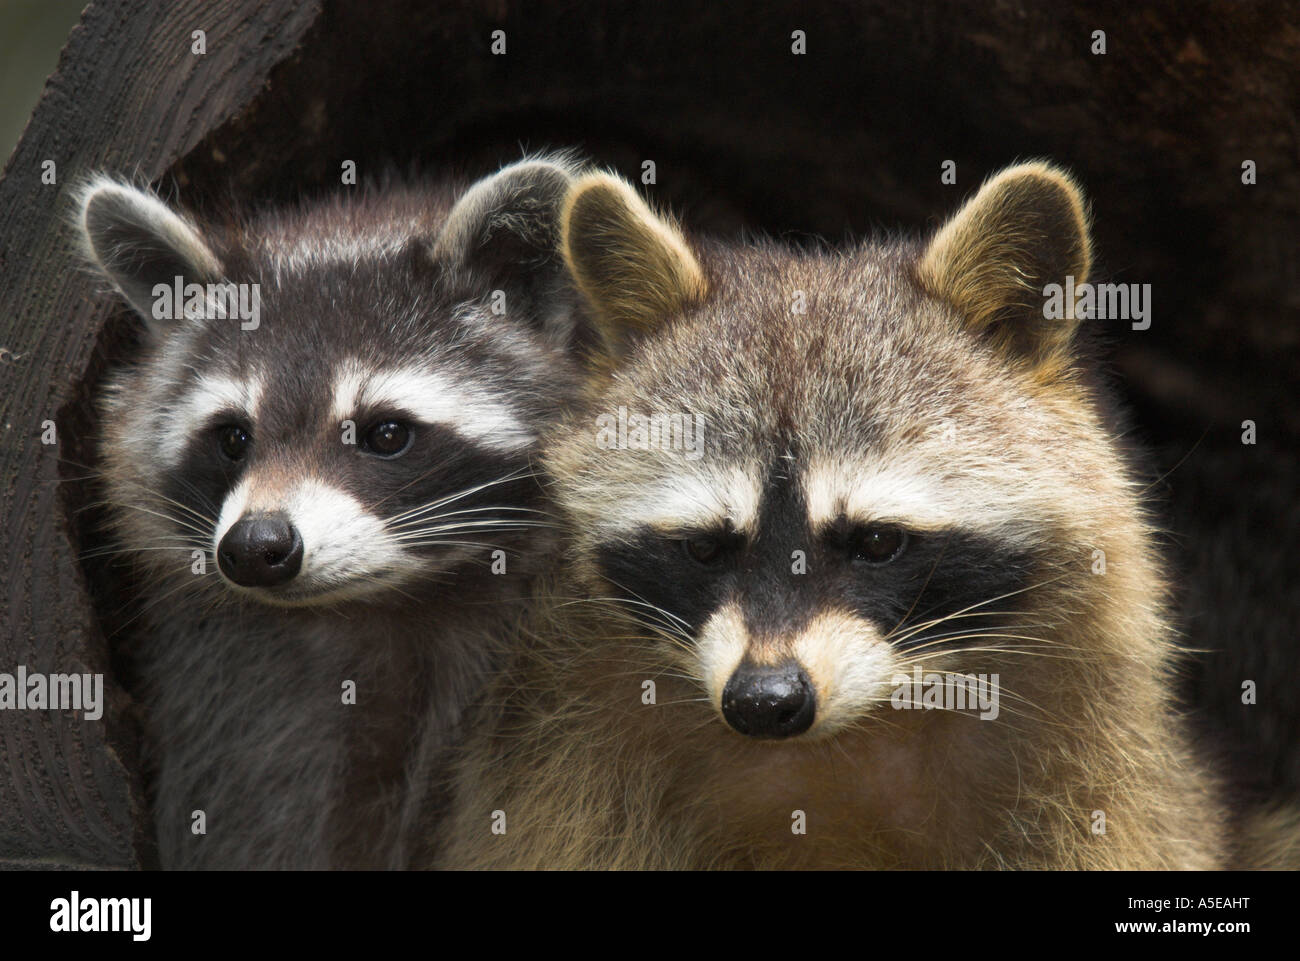 pair of common raccoon,Procyon lotor, Waschbär Pärchen Stock Photo